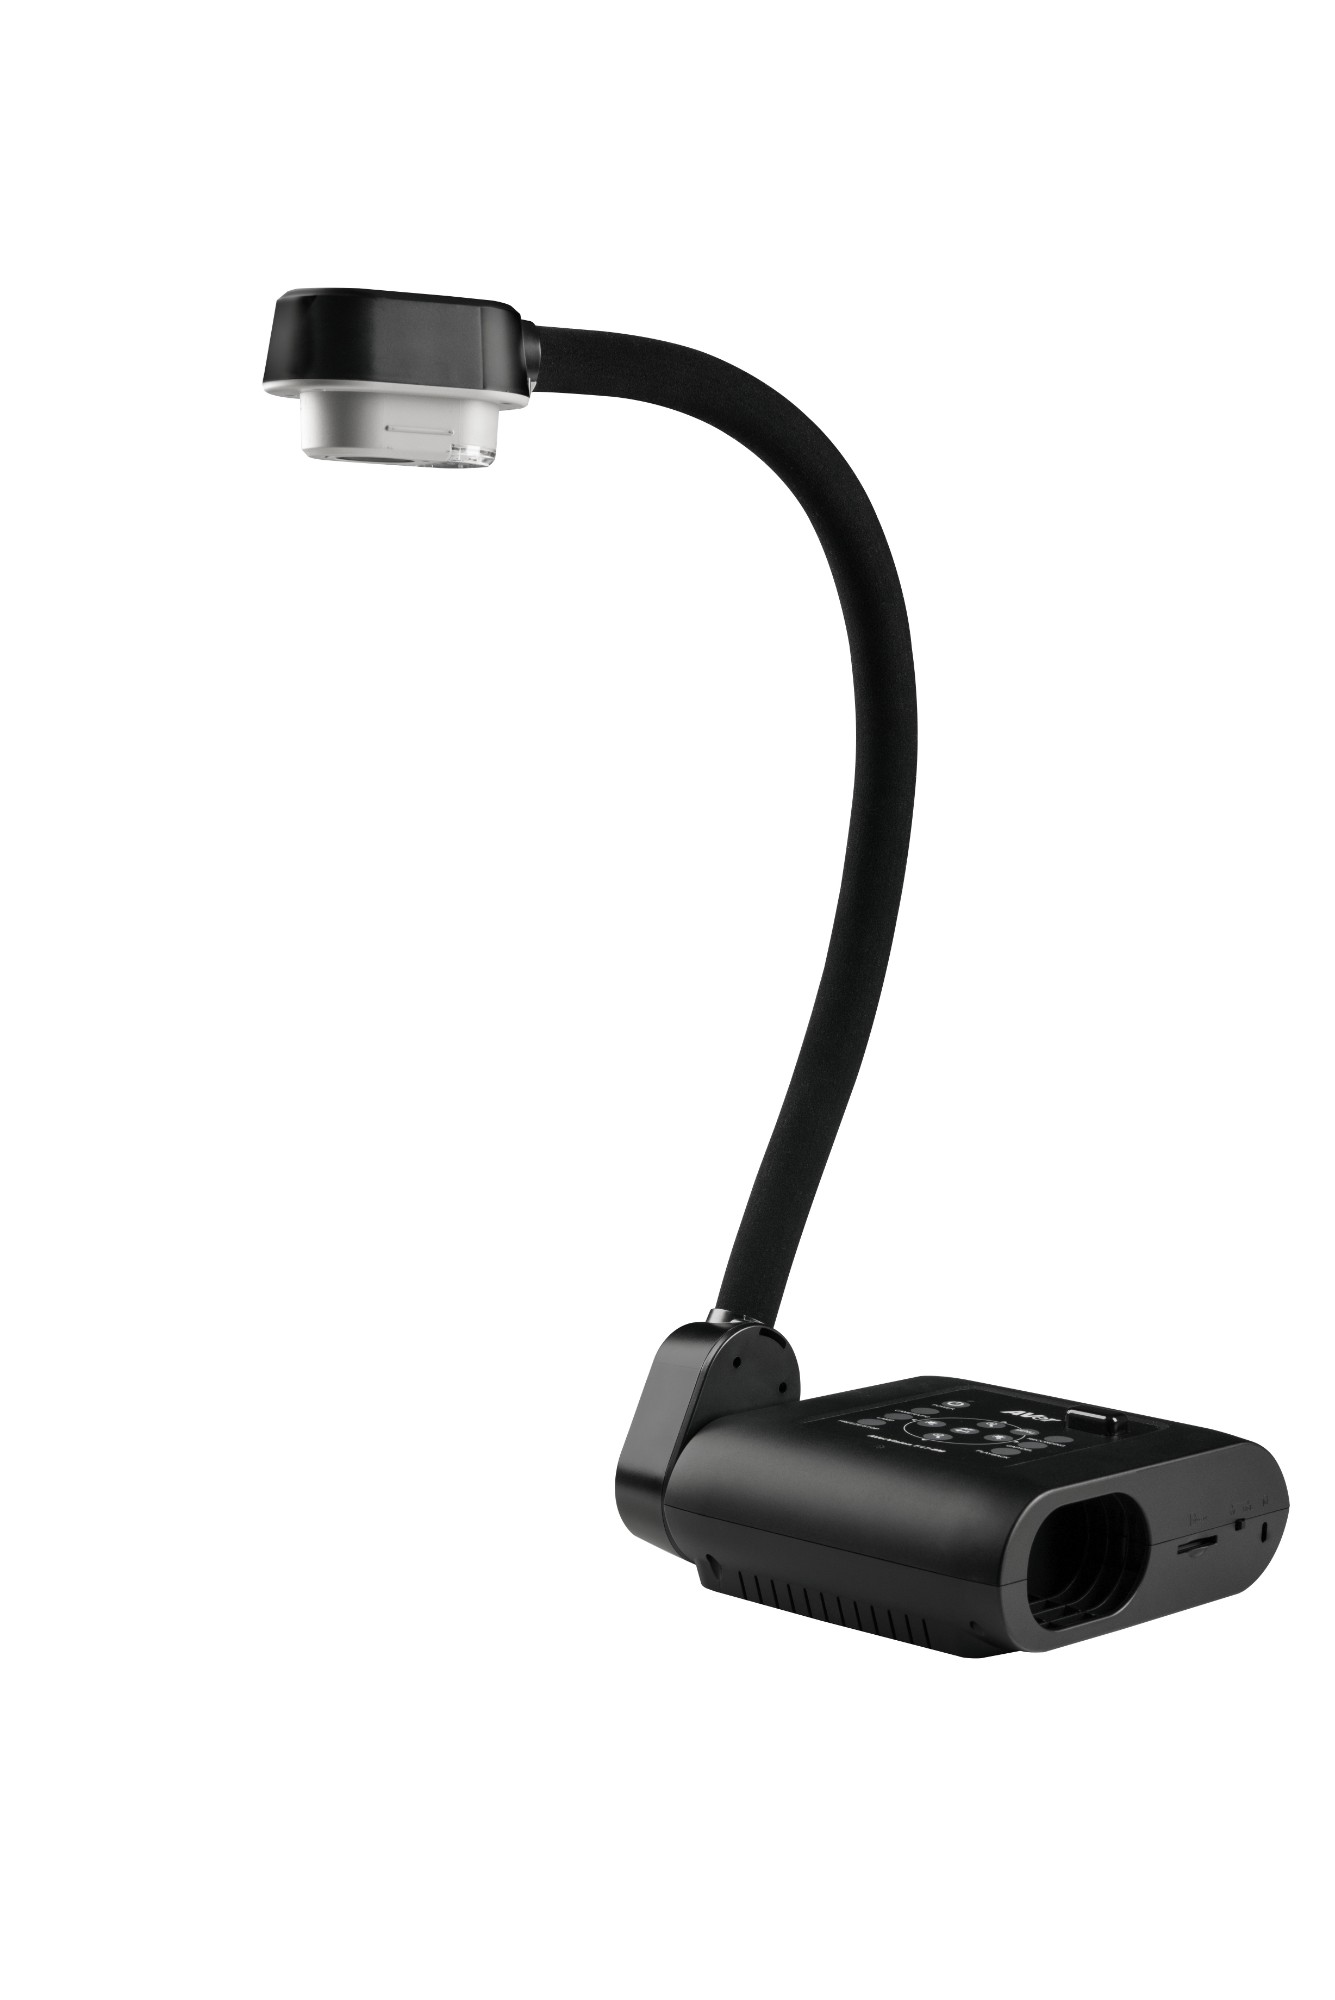 AVer F17-8M document camera Black 25.4 / 3.2 mm (1 / 3.2") CMOS USB 2.0